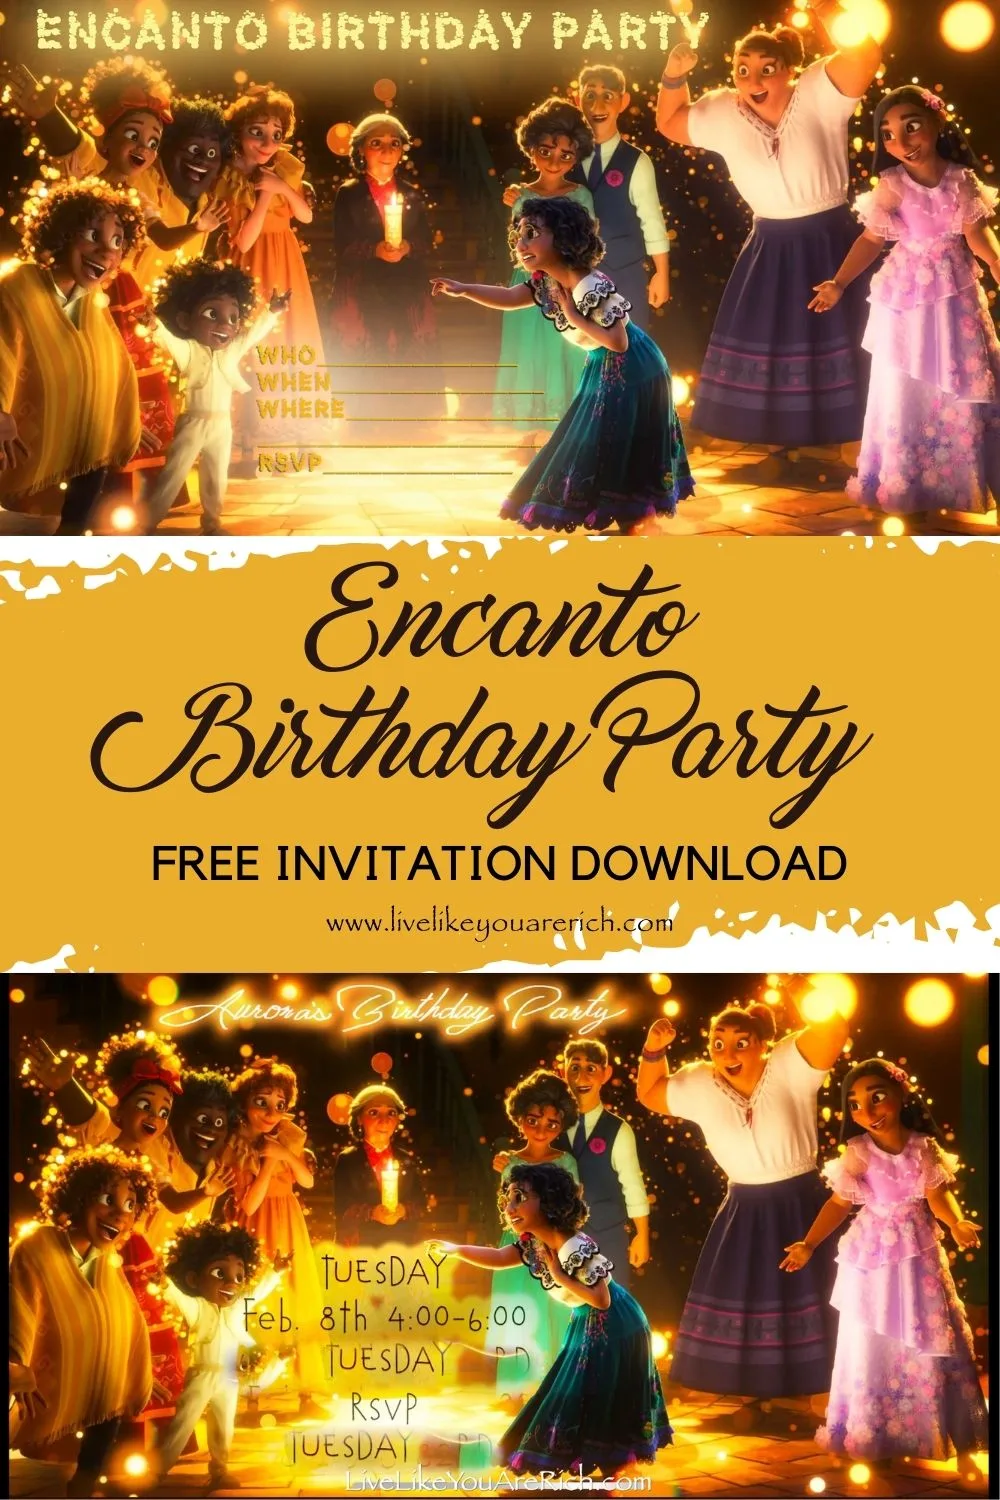 Encanto Birthday Party Free Invitation Download